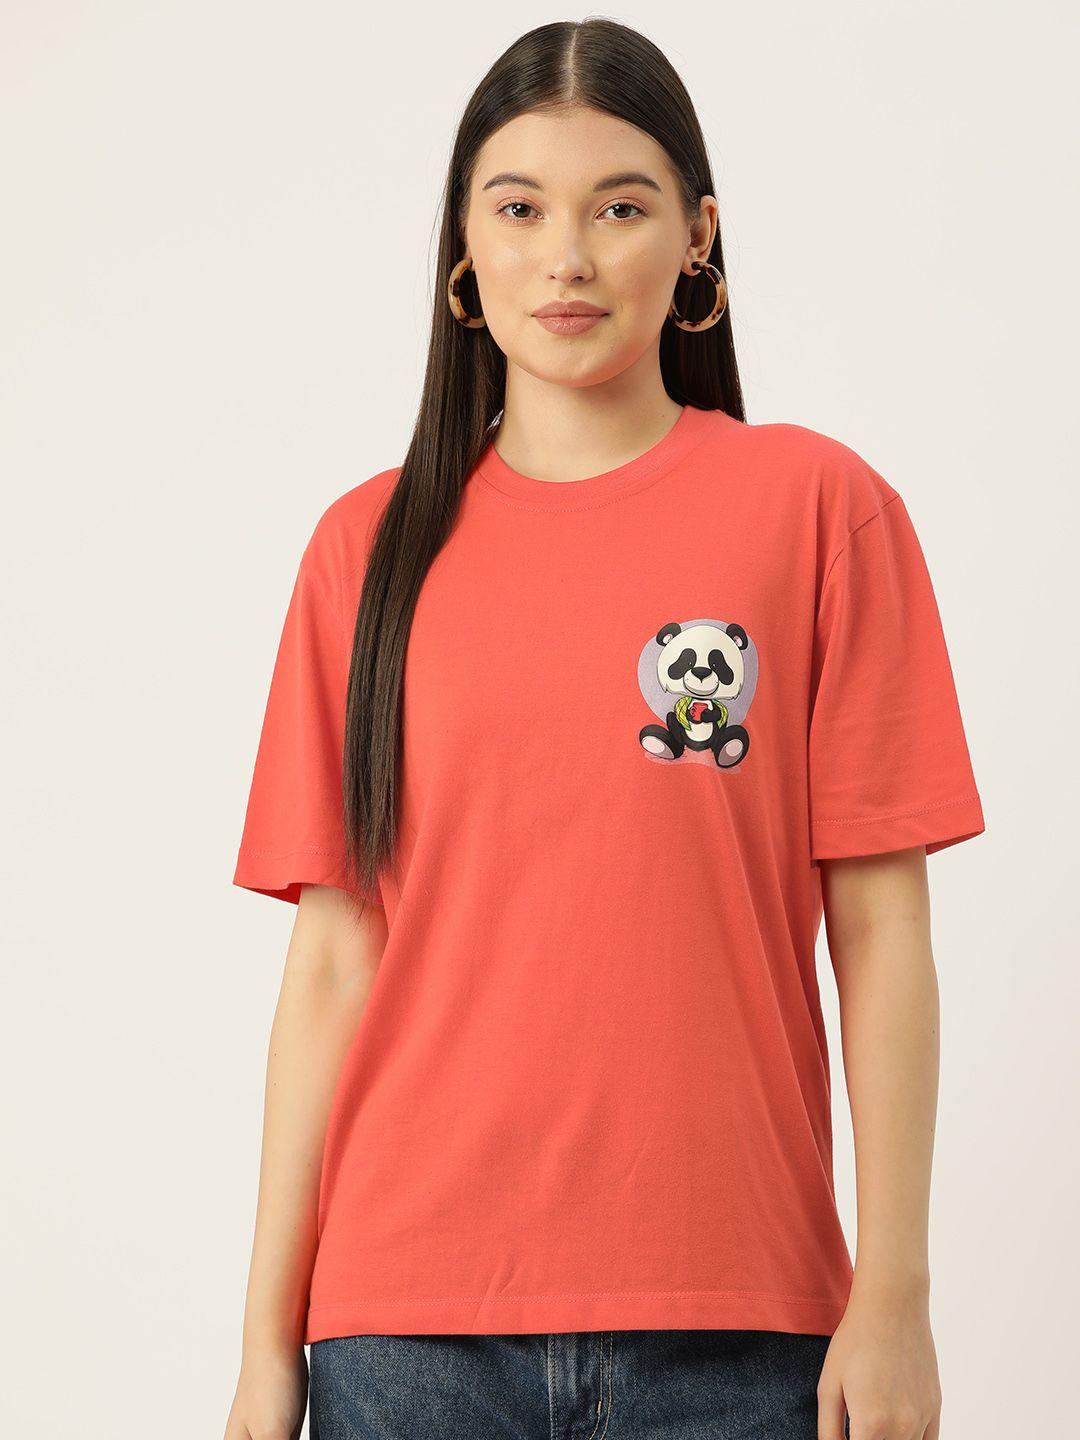 slenor women printed t-shirt